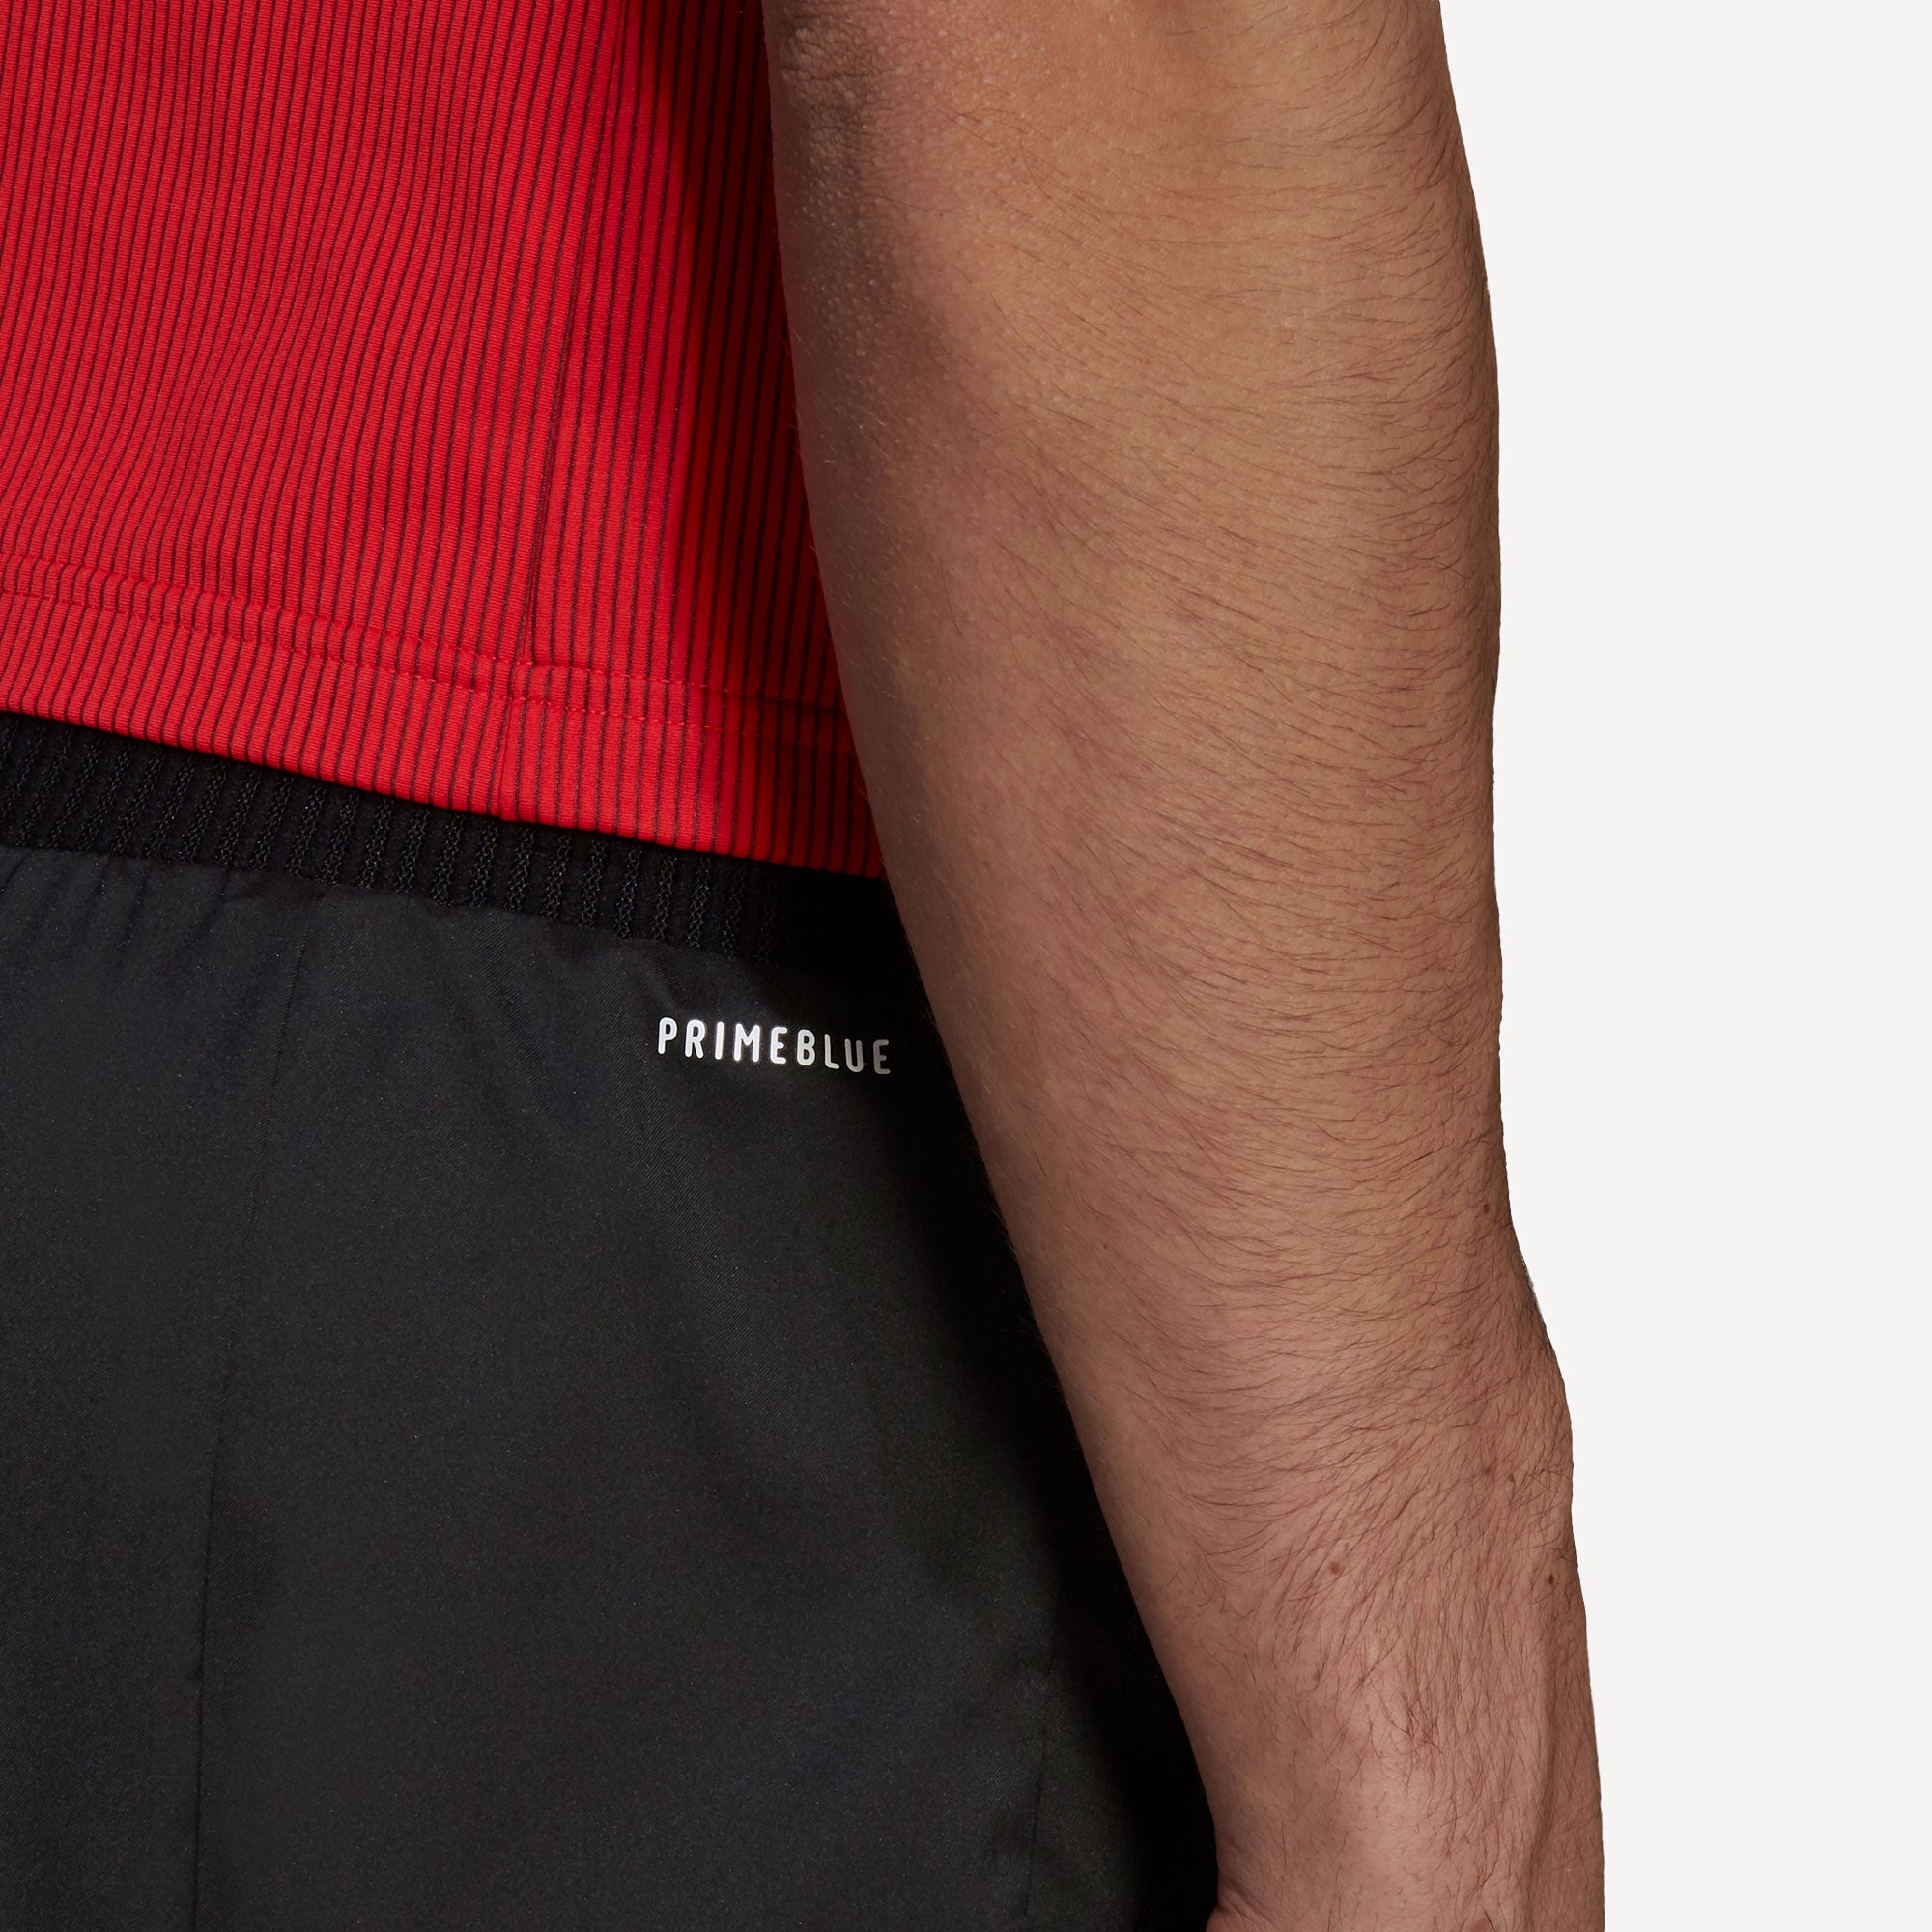 adidas Ergo Primeblue Men's 7-Inch Tennis Shorts Black (5)